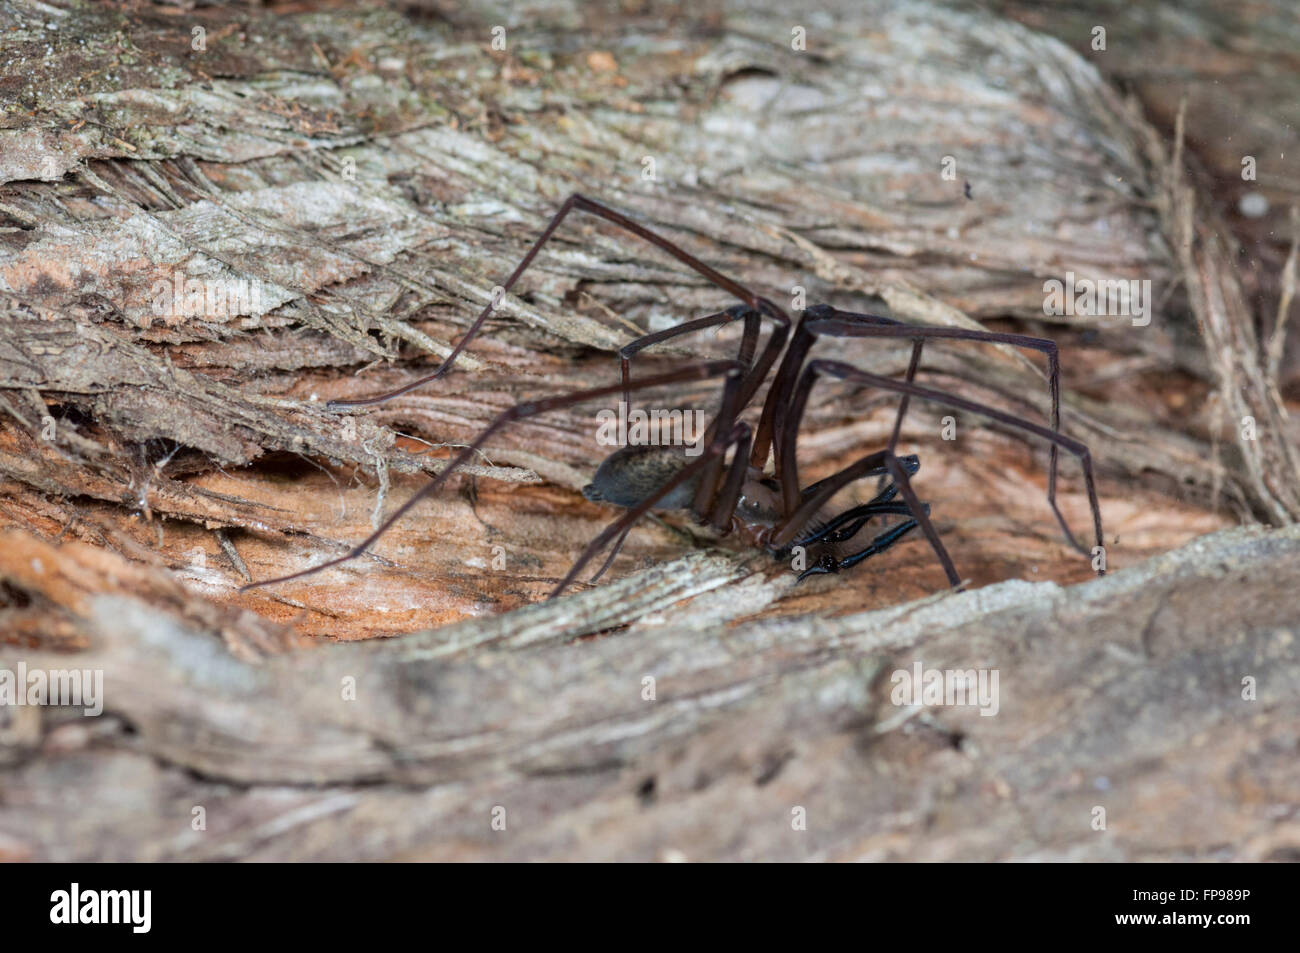 Daddy Long-legs Spider (Pholcus phalangioides), Western Australia, Australia Stock Photo